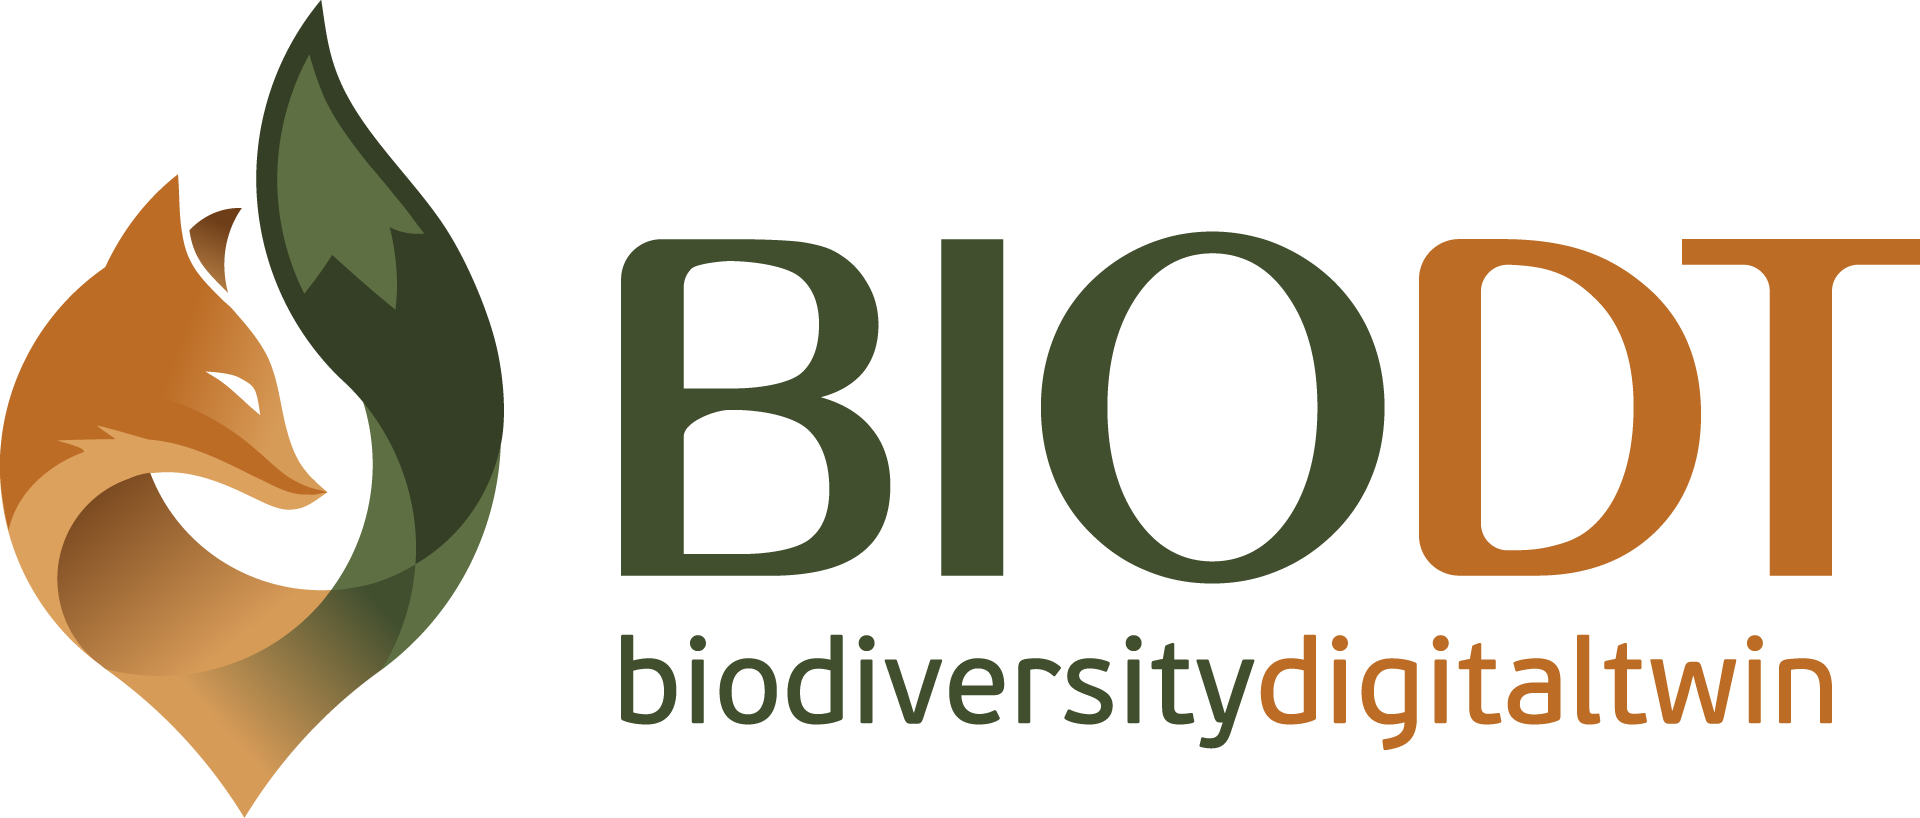 BioDT logo